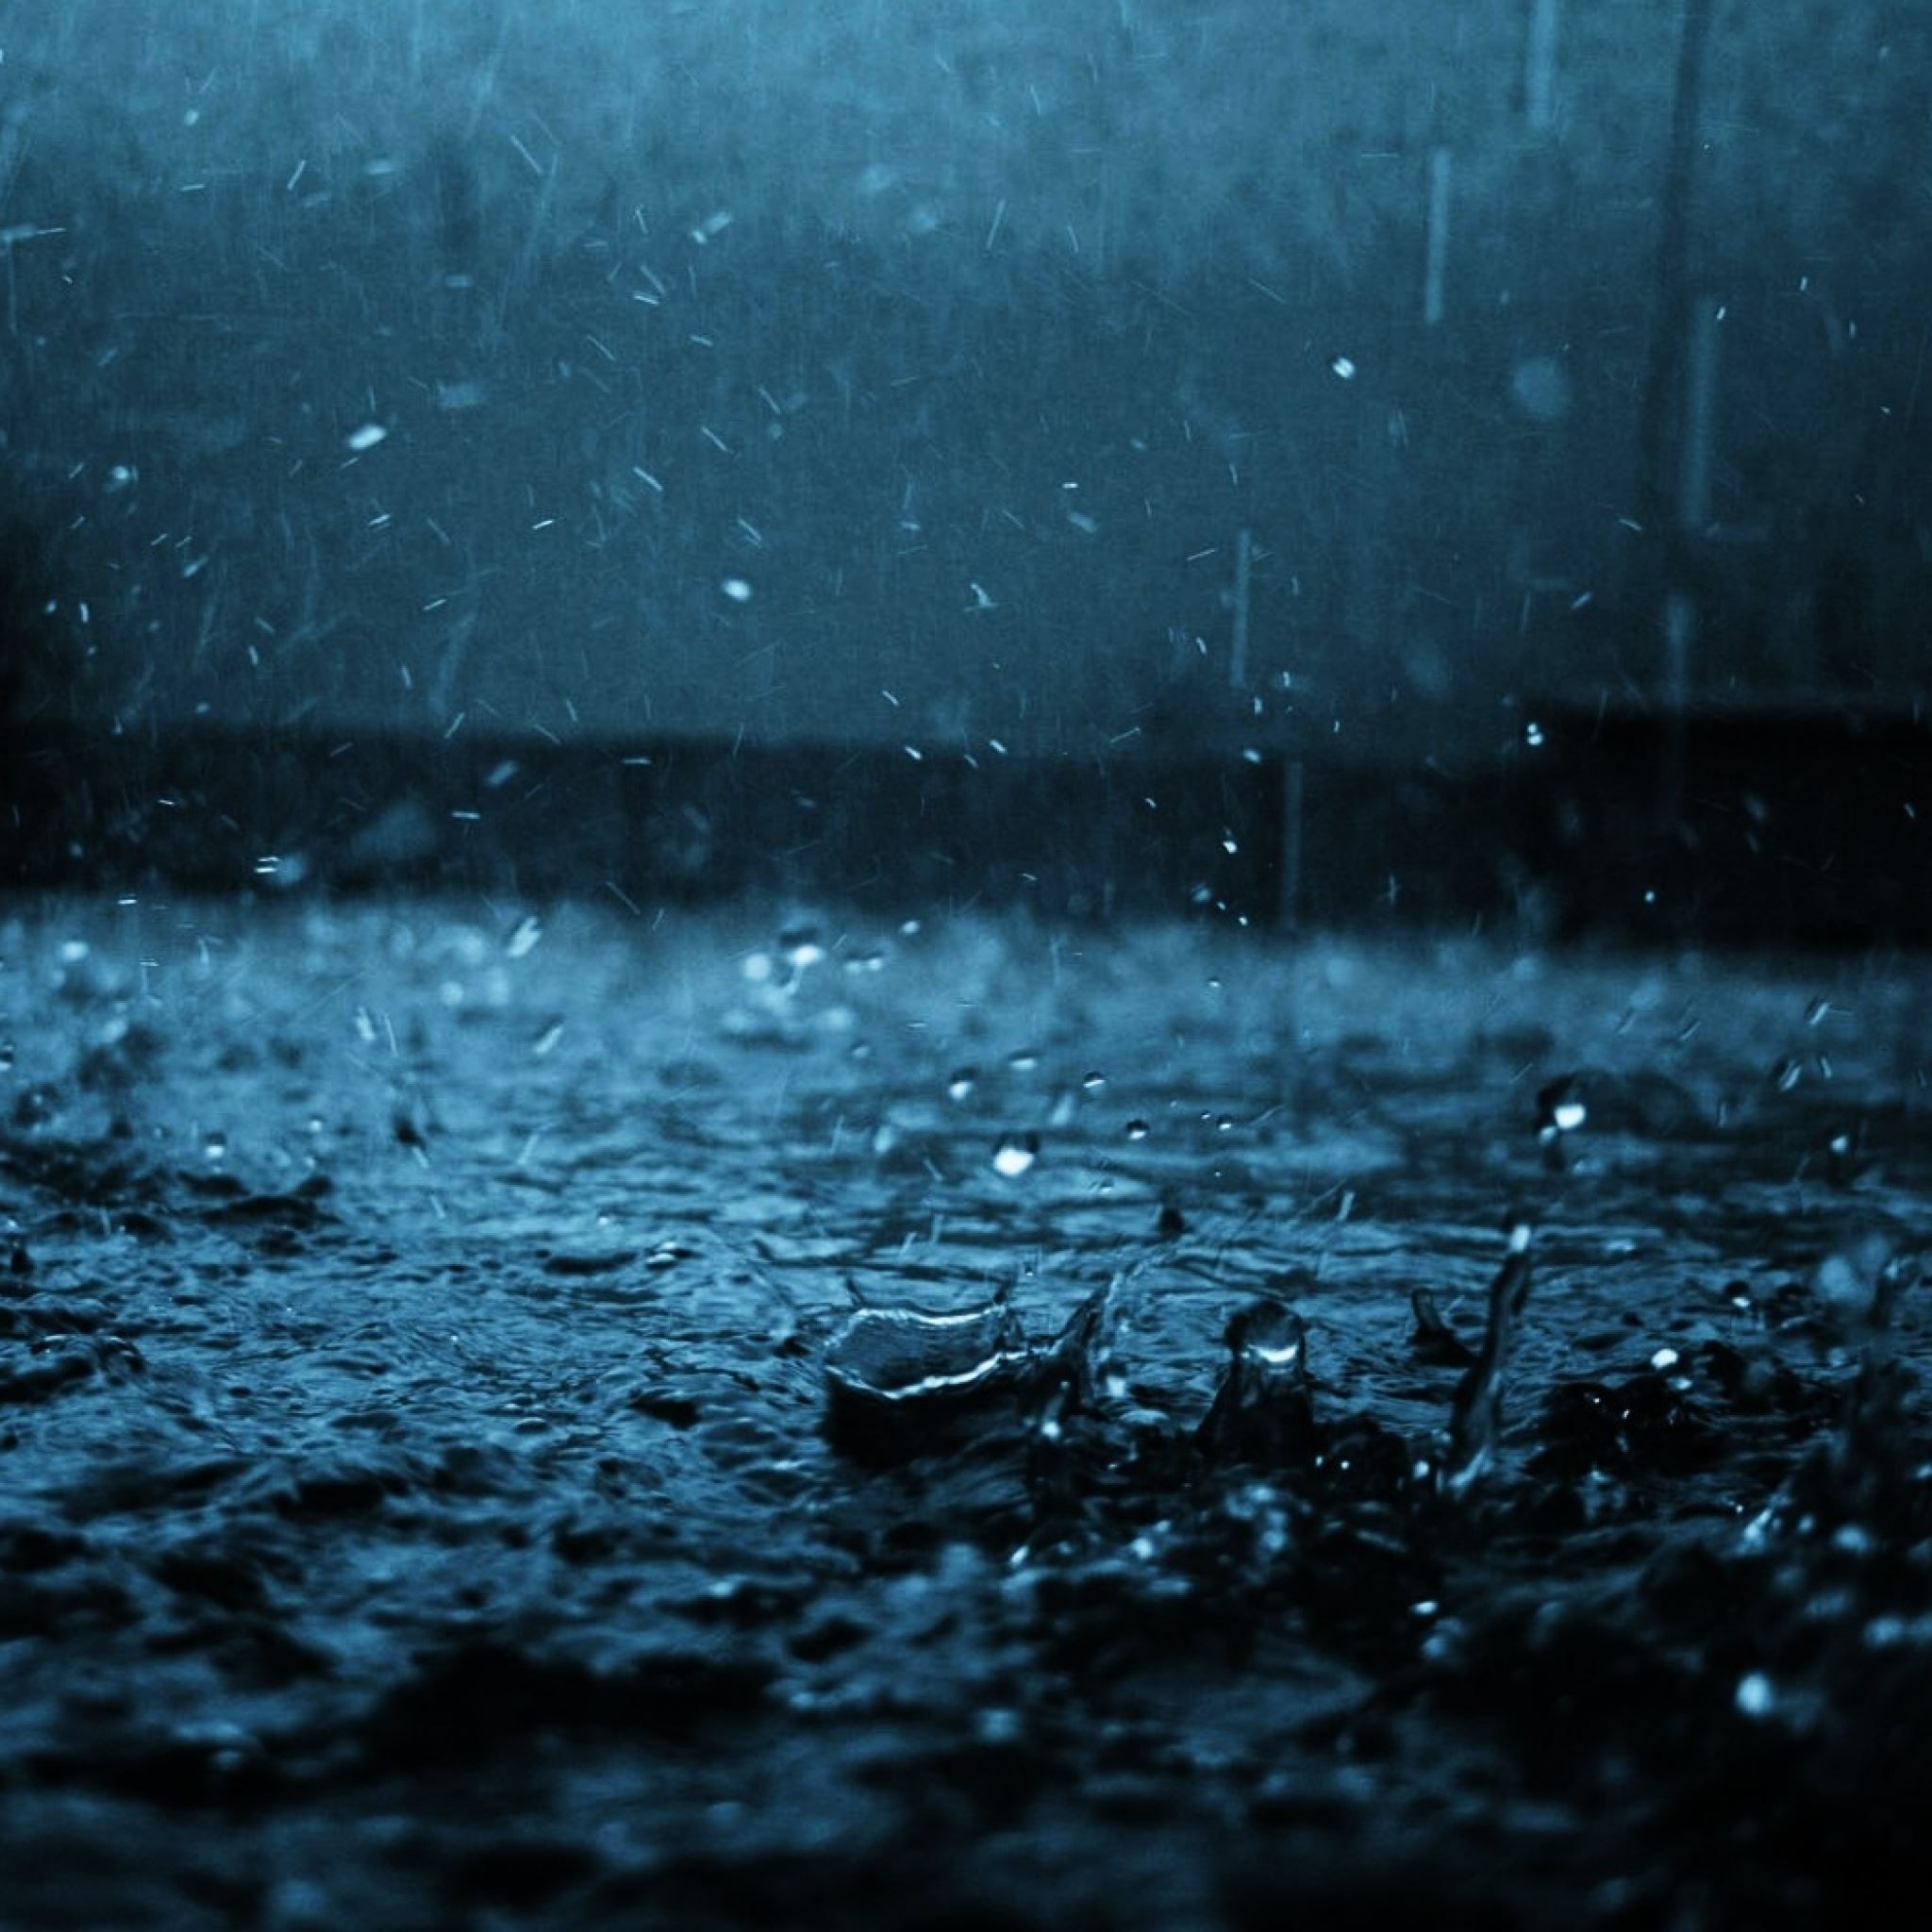 Raindrops falling on the ground in the dark. - Rain